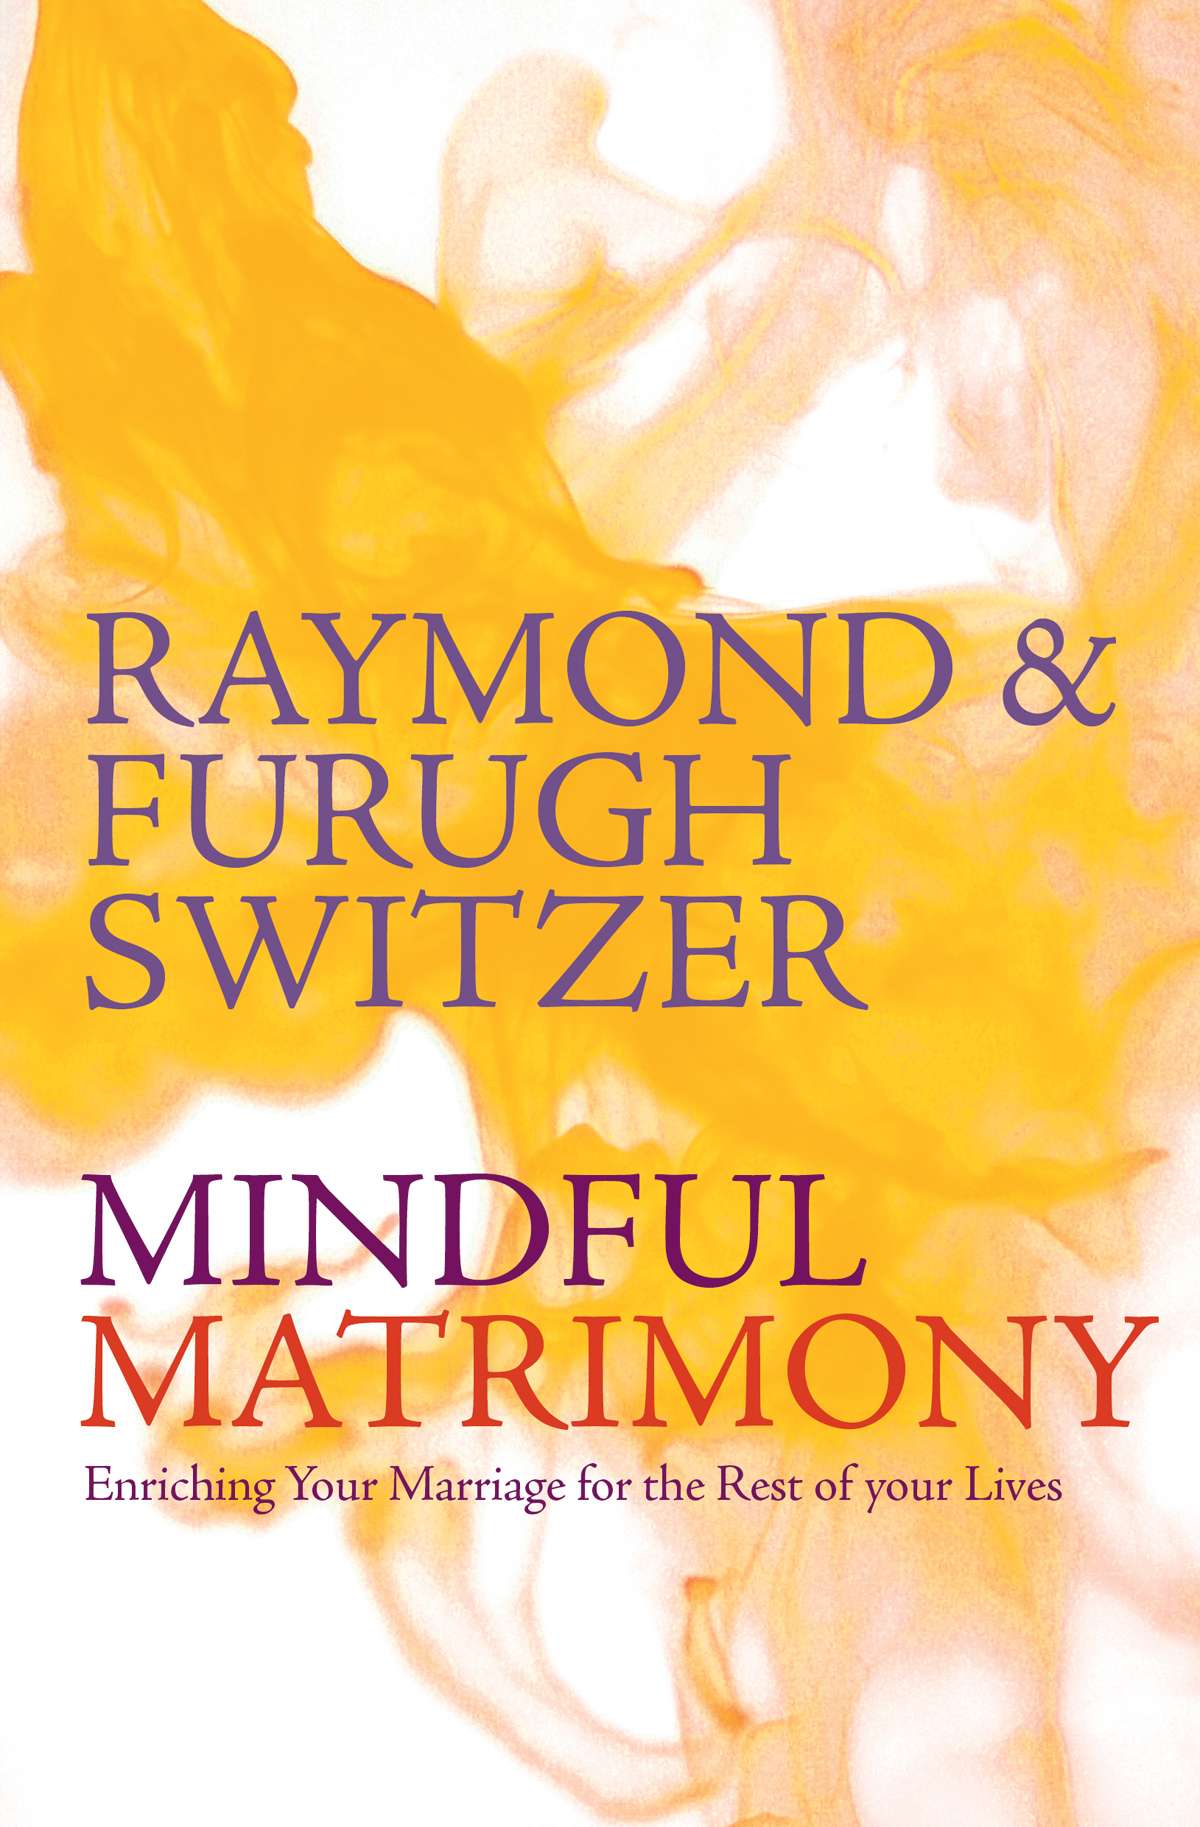 george ronald  book covers  cover  book  oxford  human rights  marriage  matrimony  baha'i   Faith  spiritual  history  Development